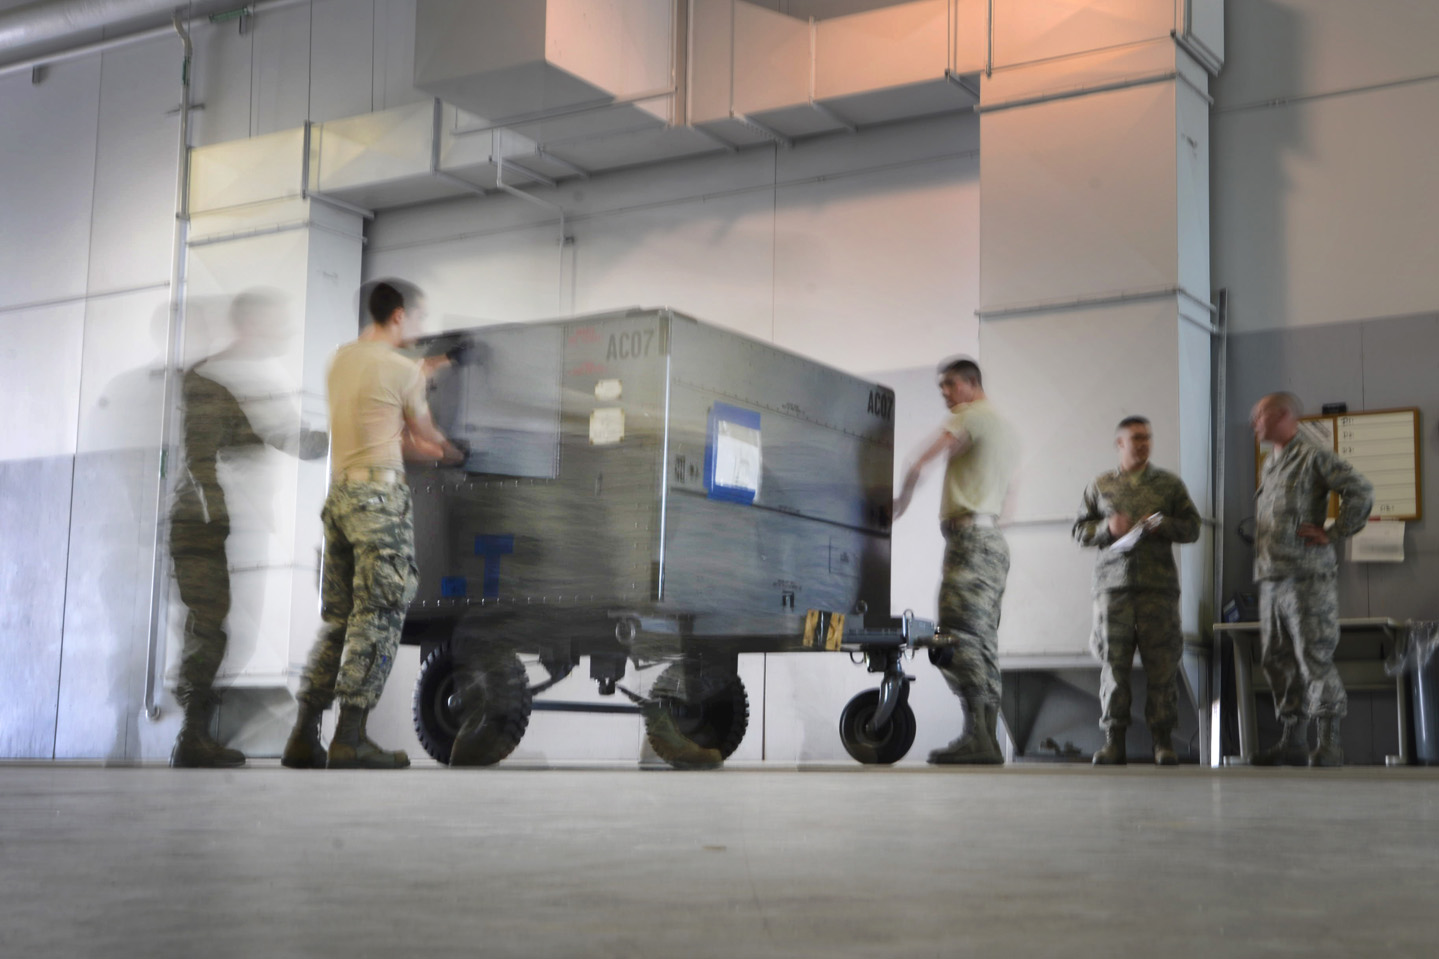 Airmen move cargo around a wearhouse